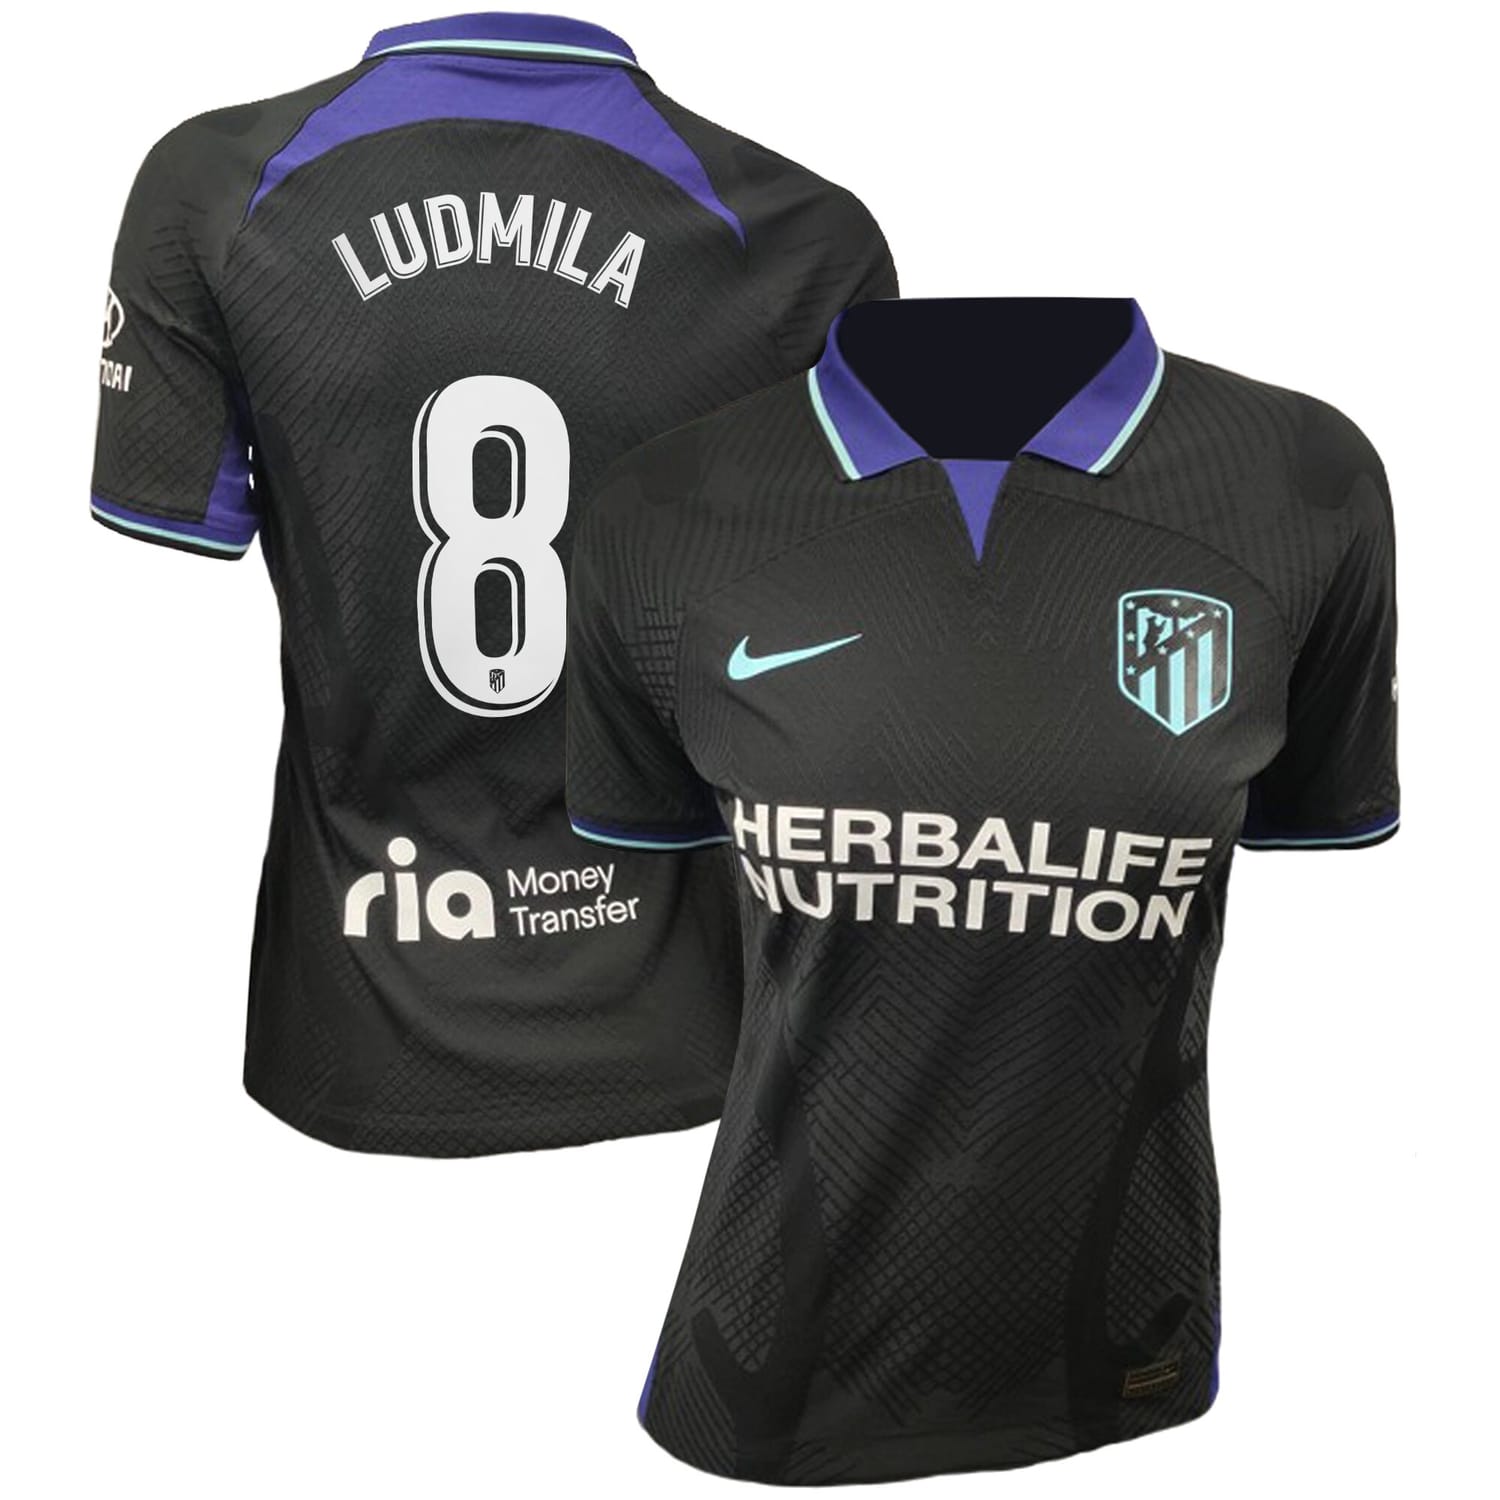 La Liga Atletico de Madrid Away Jersey Shirt 2022-23 player Ludmila da Silva 8 printing for Women